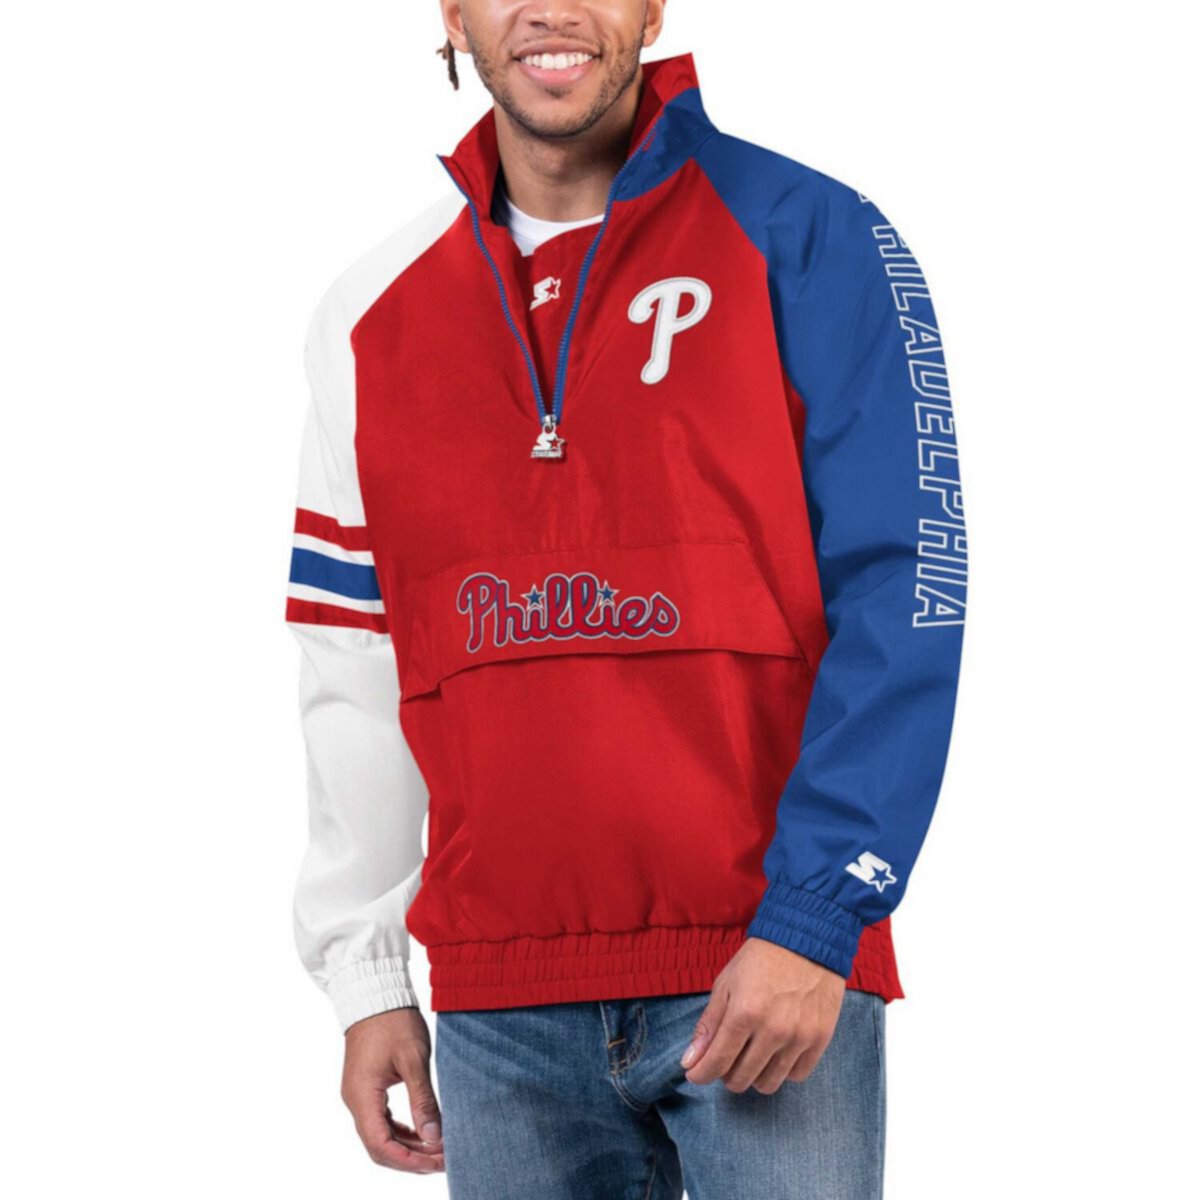 Мужская базовая красная/Royal Philadelphia Phillies Elite куртка с молнией до половины реглан Starter